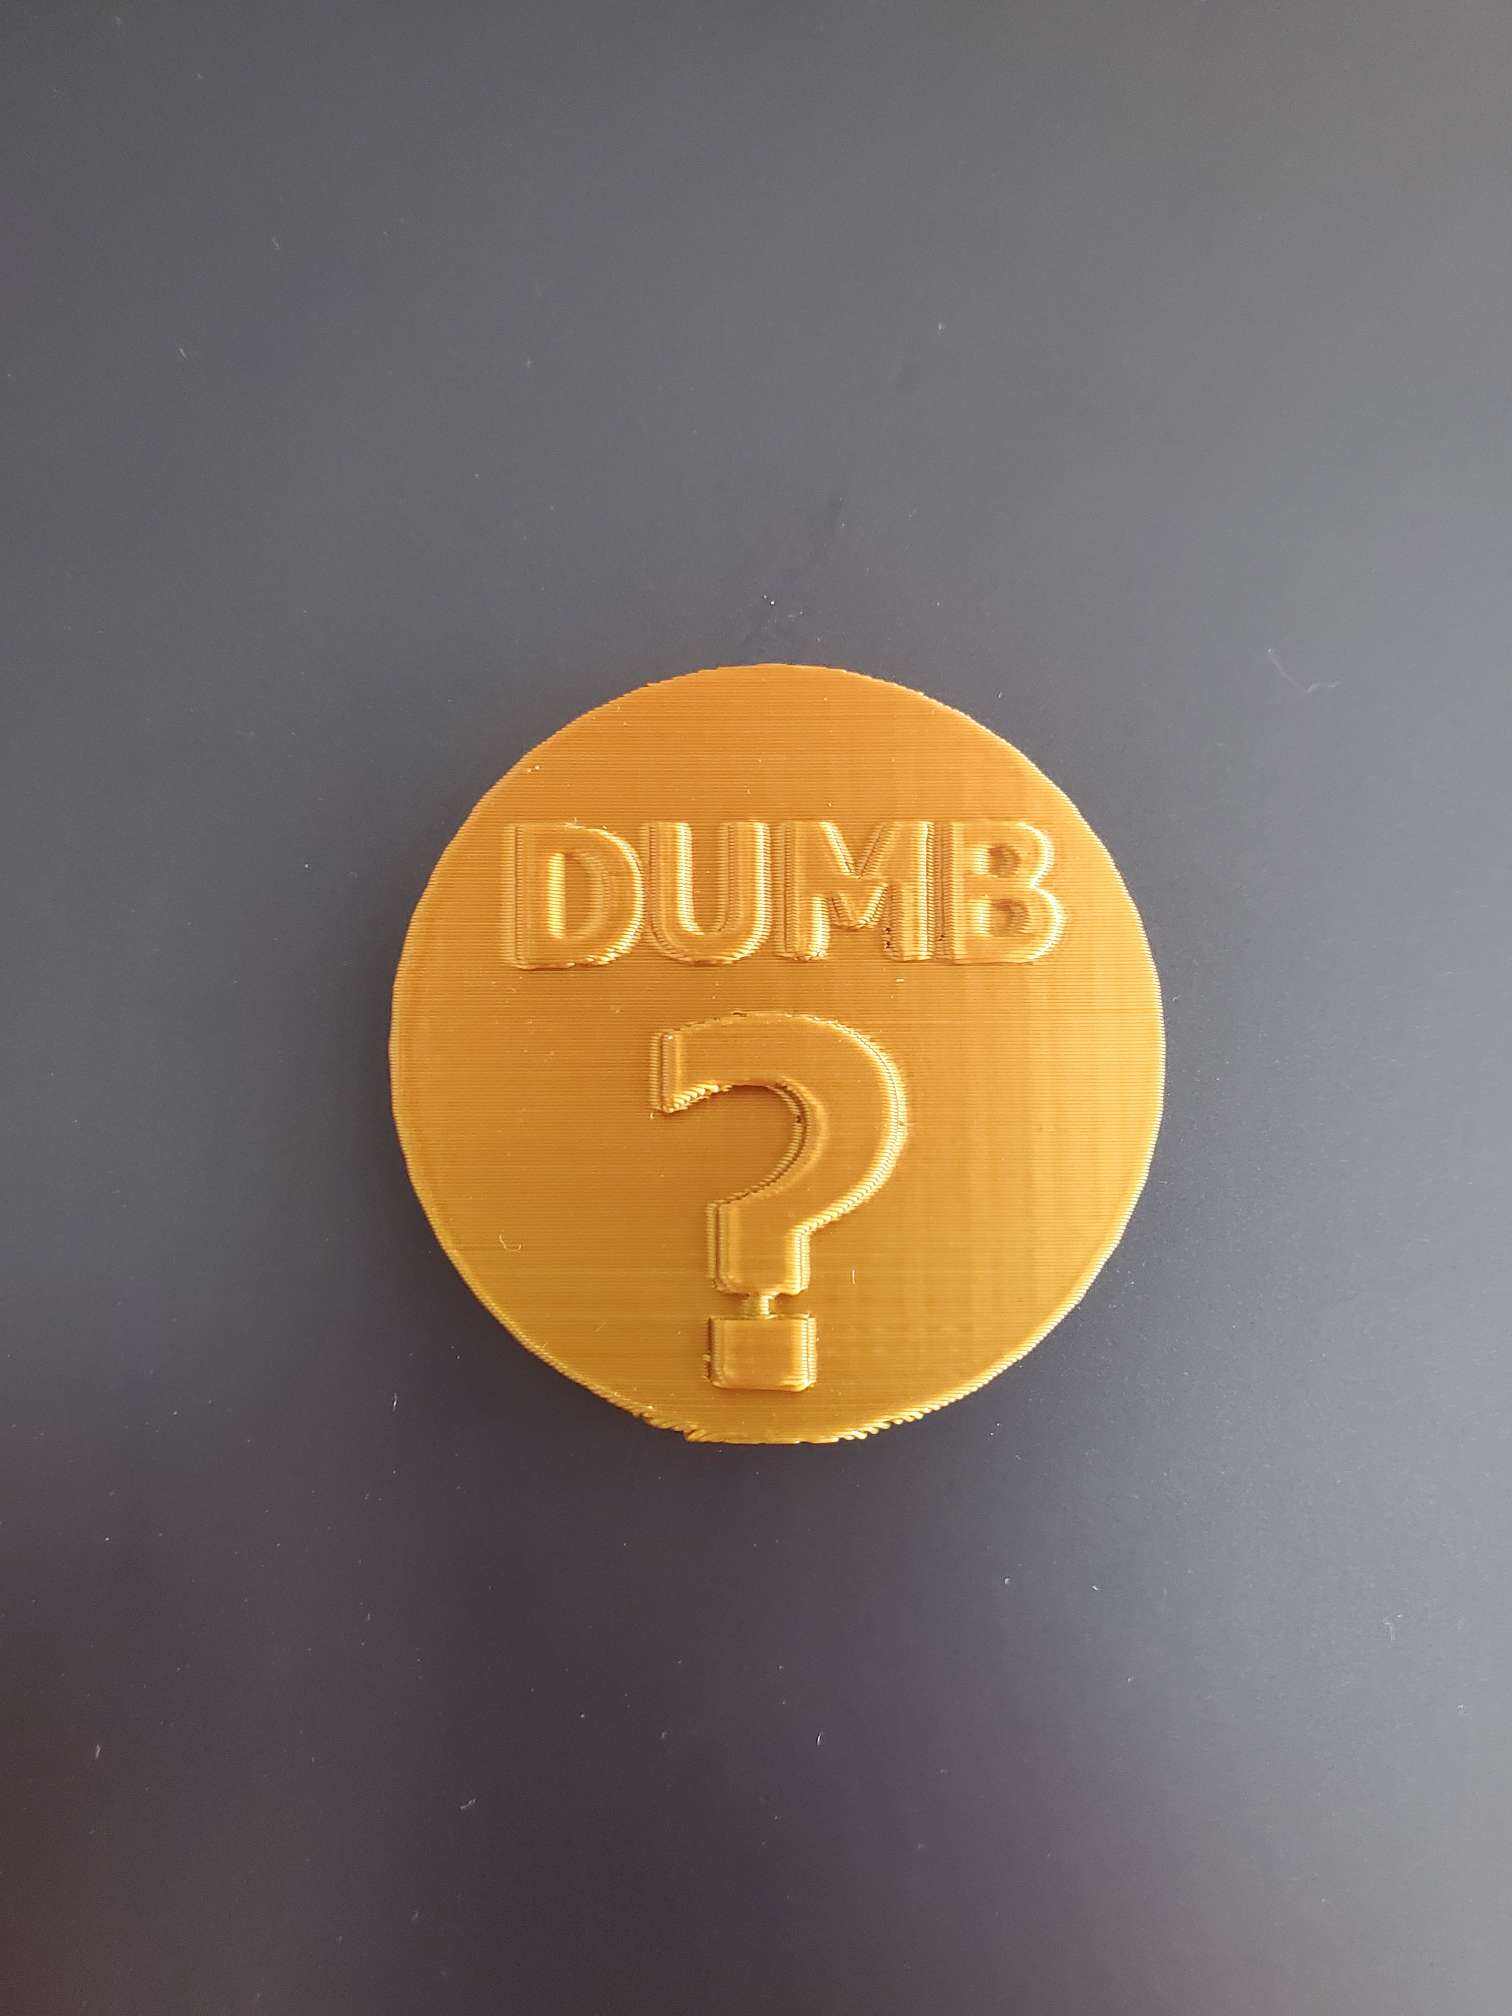 Dumb Question coin